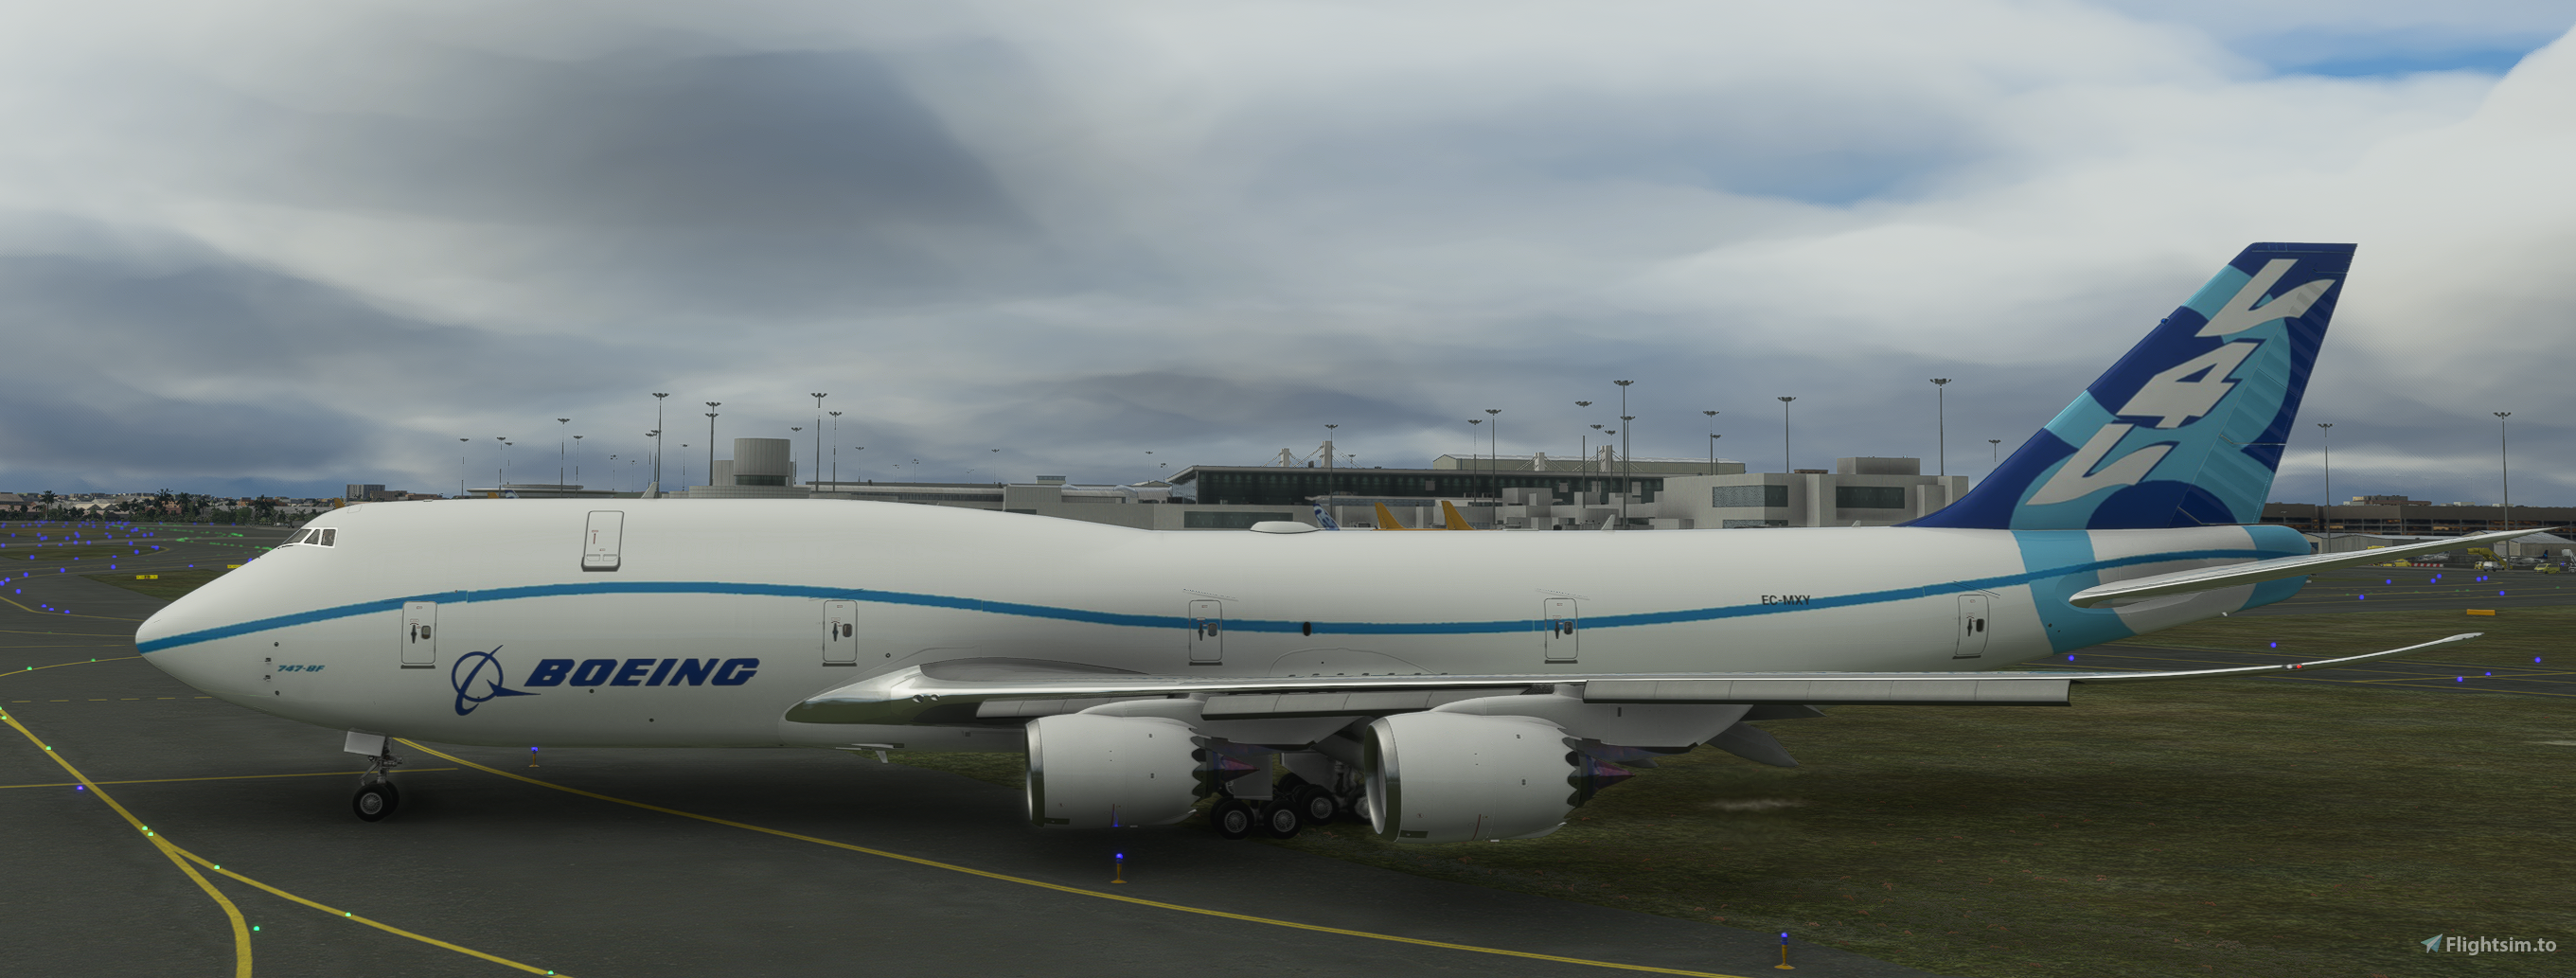 pmdg 747-8 liveries